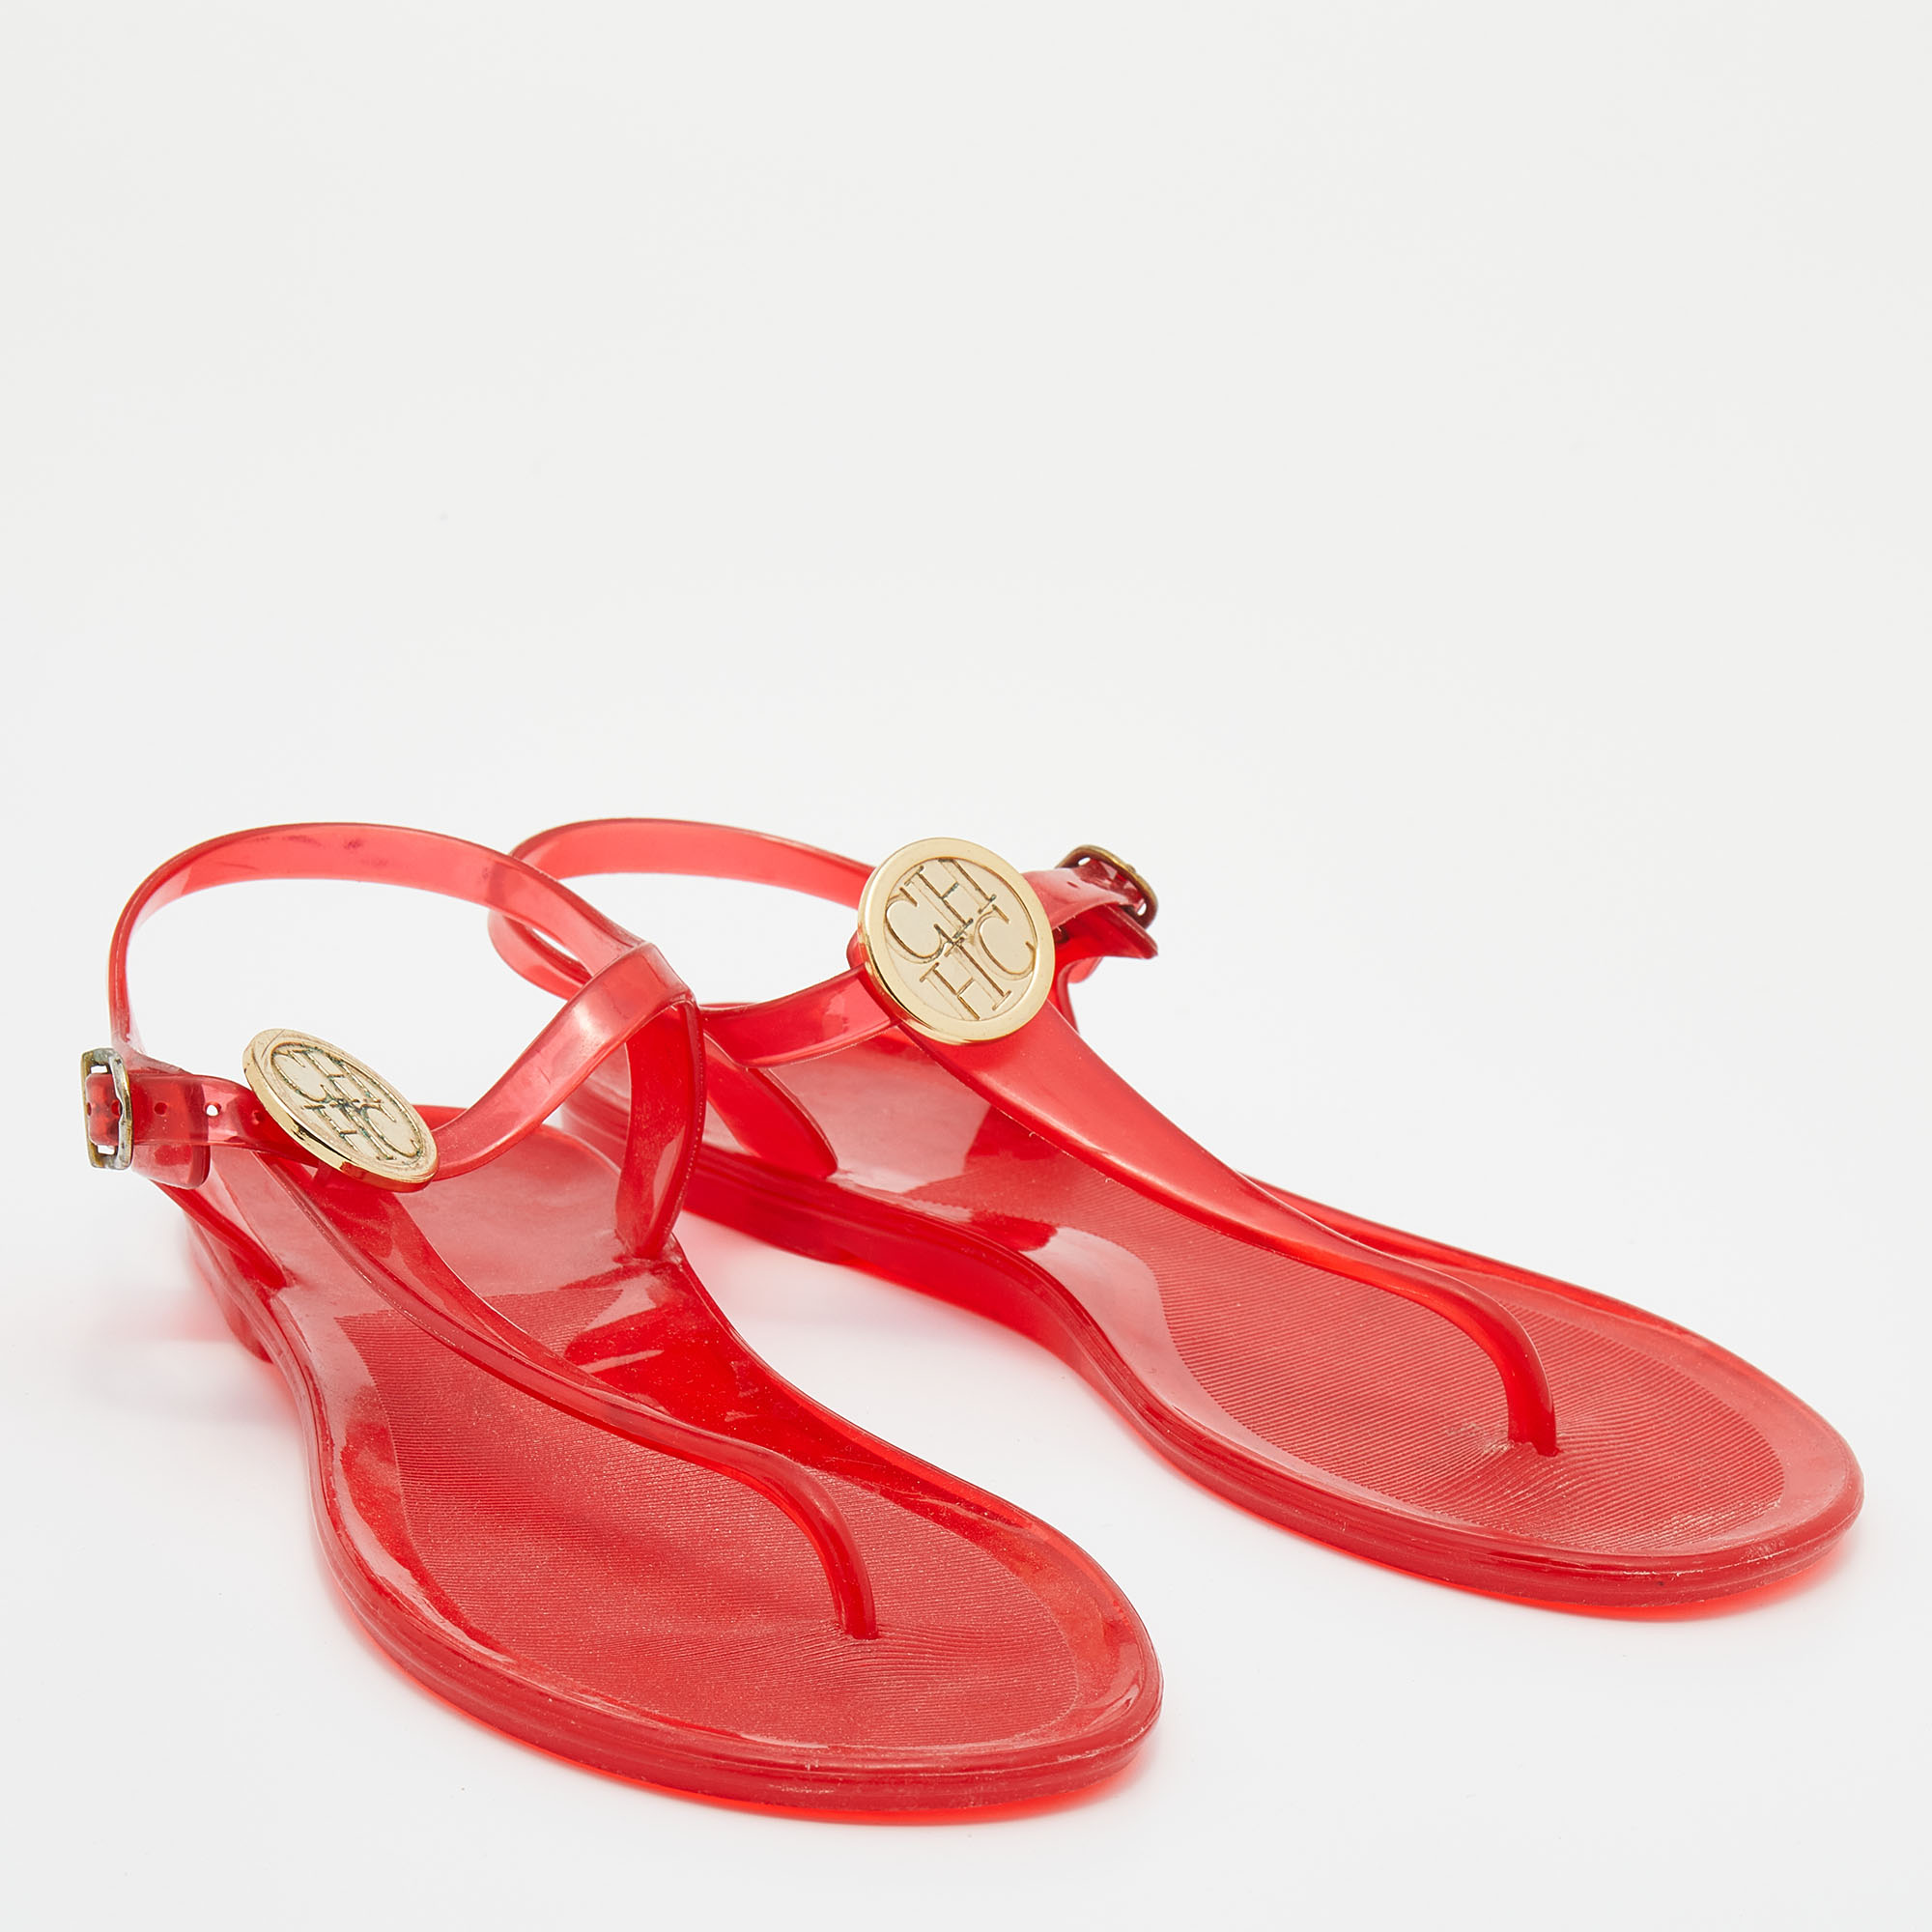 CH Arolina Herrera Red Rubber Logo Thong Flat Sandals Size 37